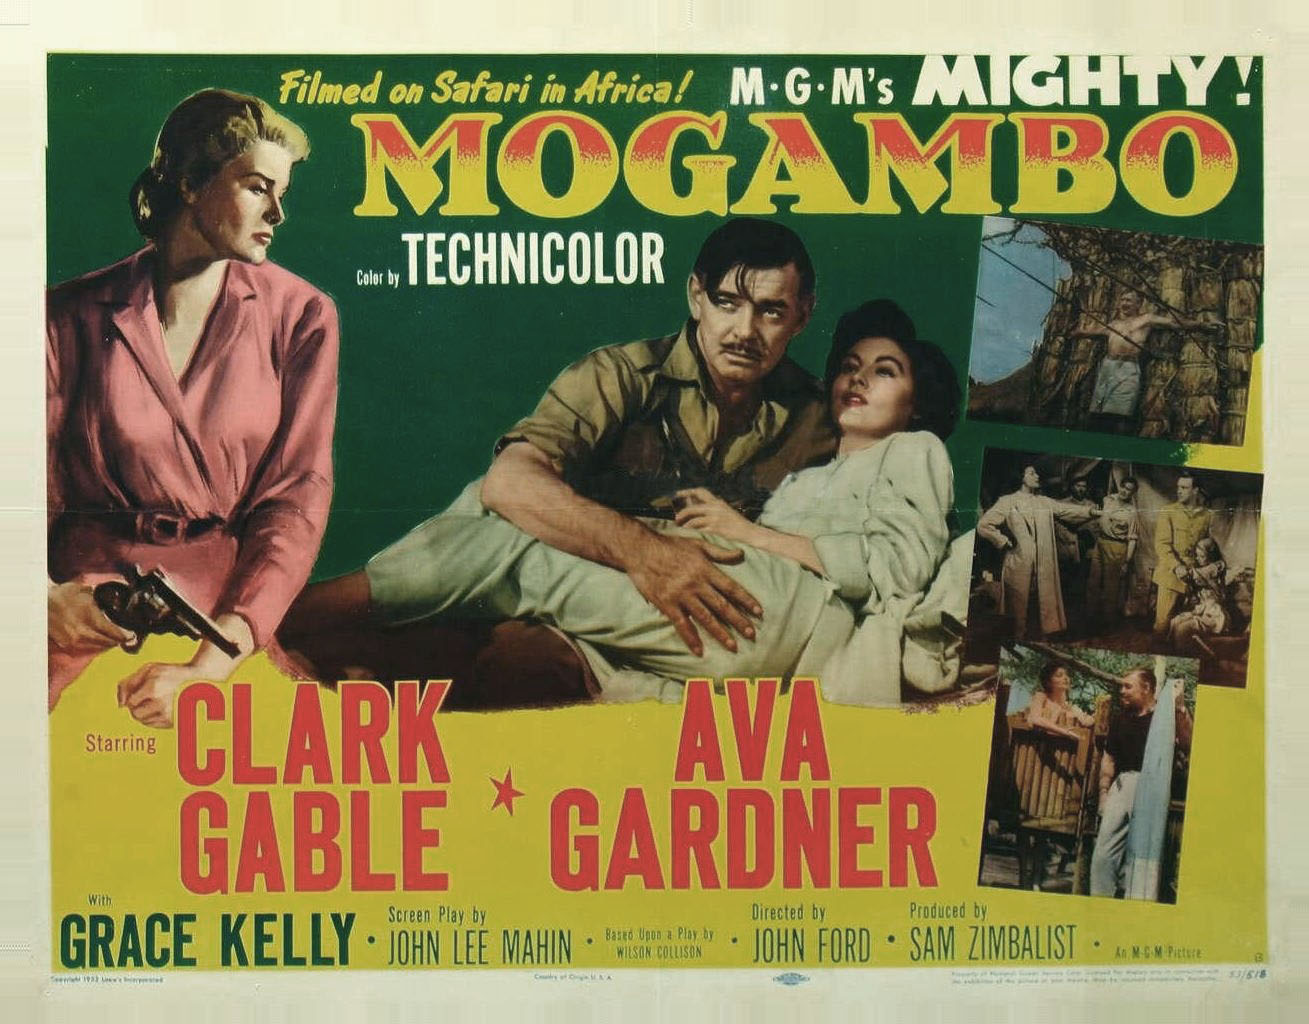 Cartel original del film "Mogambo" en US, 1953.